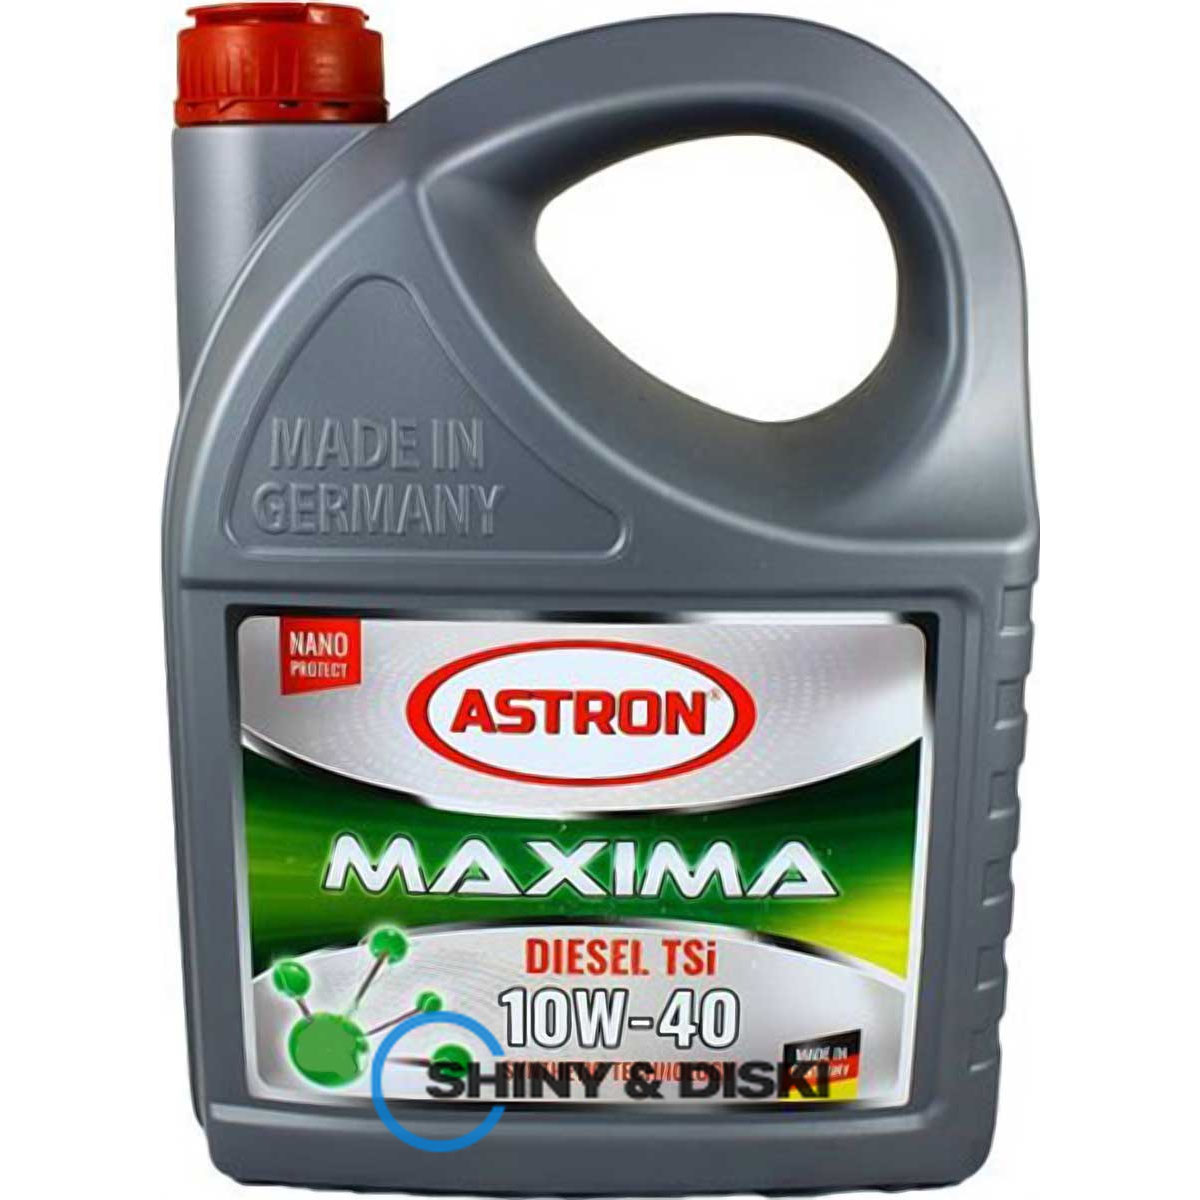 astron maxima diesel tsi